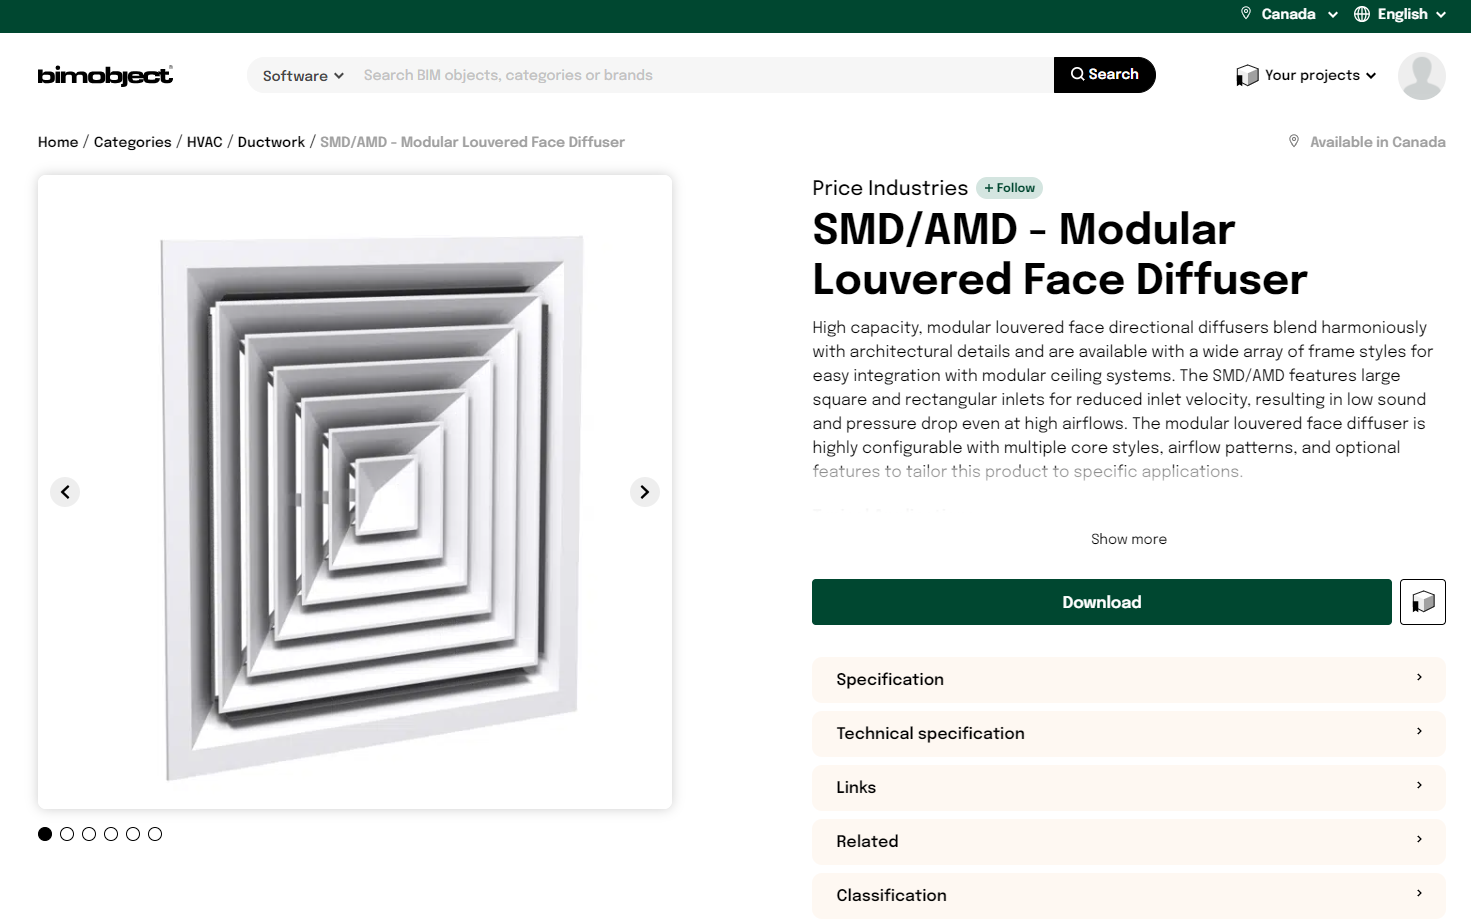 Price's Modular Louvered Face Diffuser on BIMobject